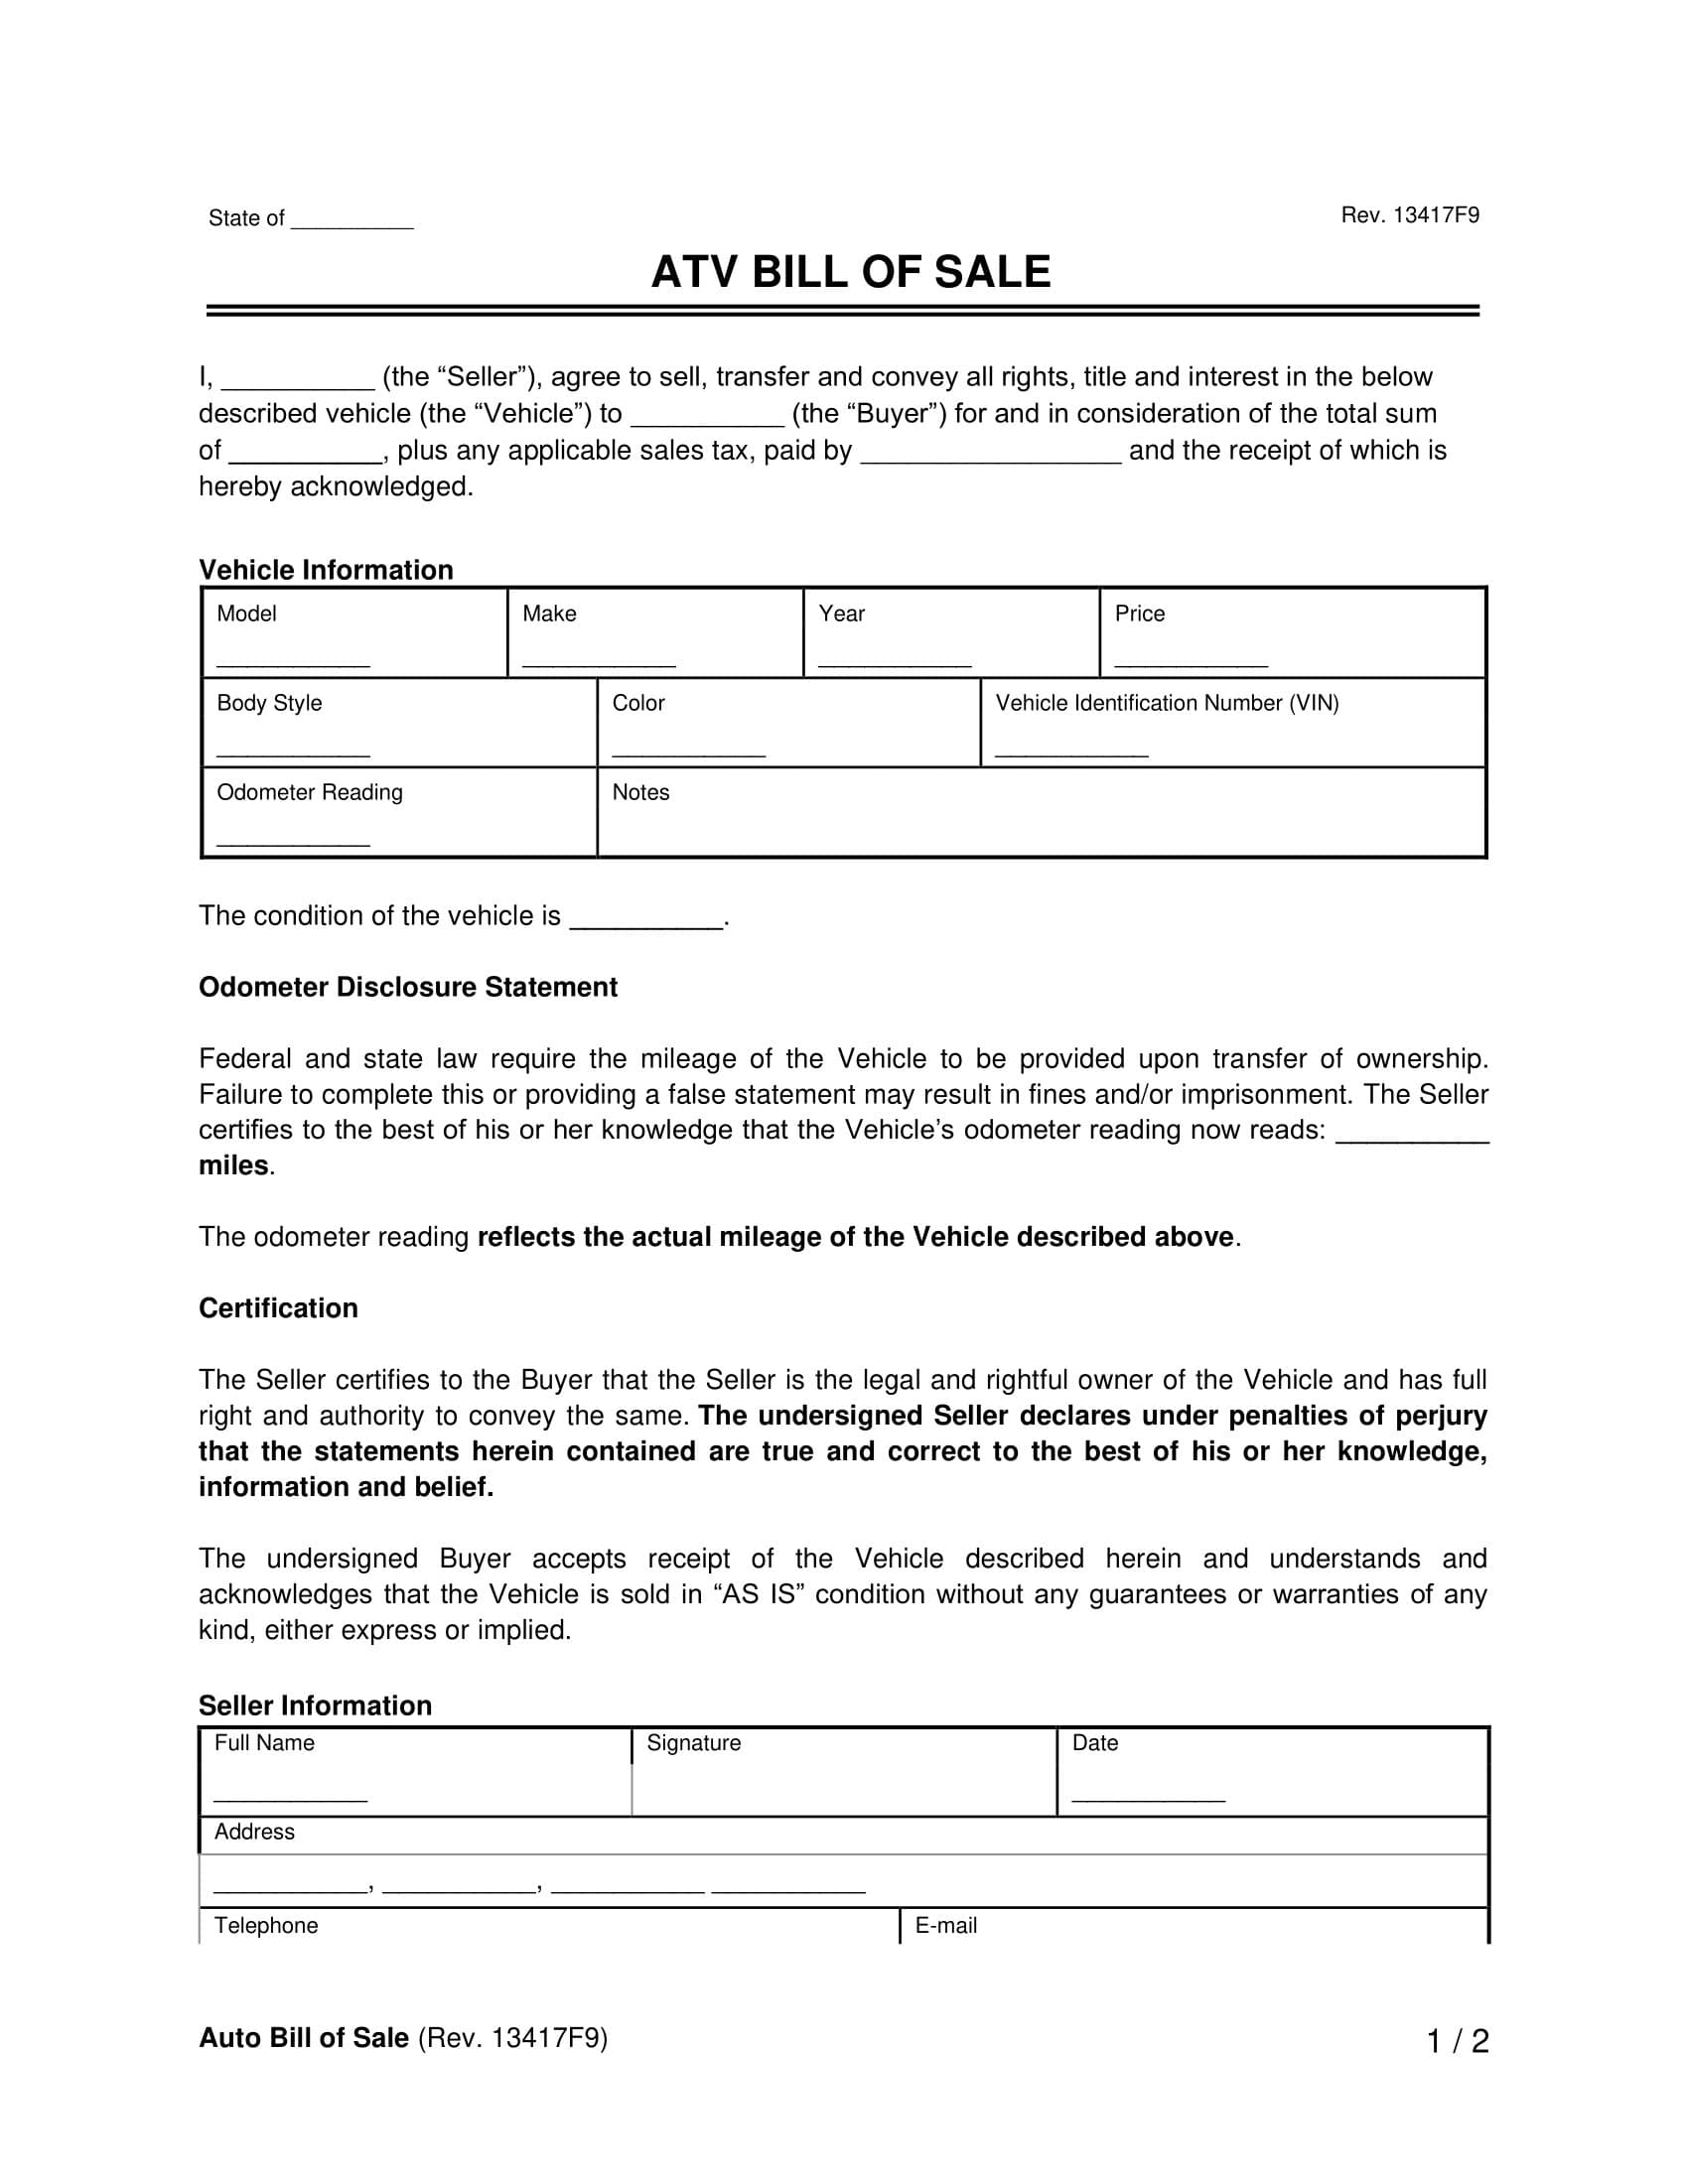 ATV Bill of Sale Sample